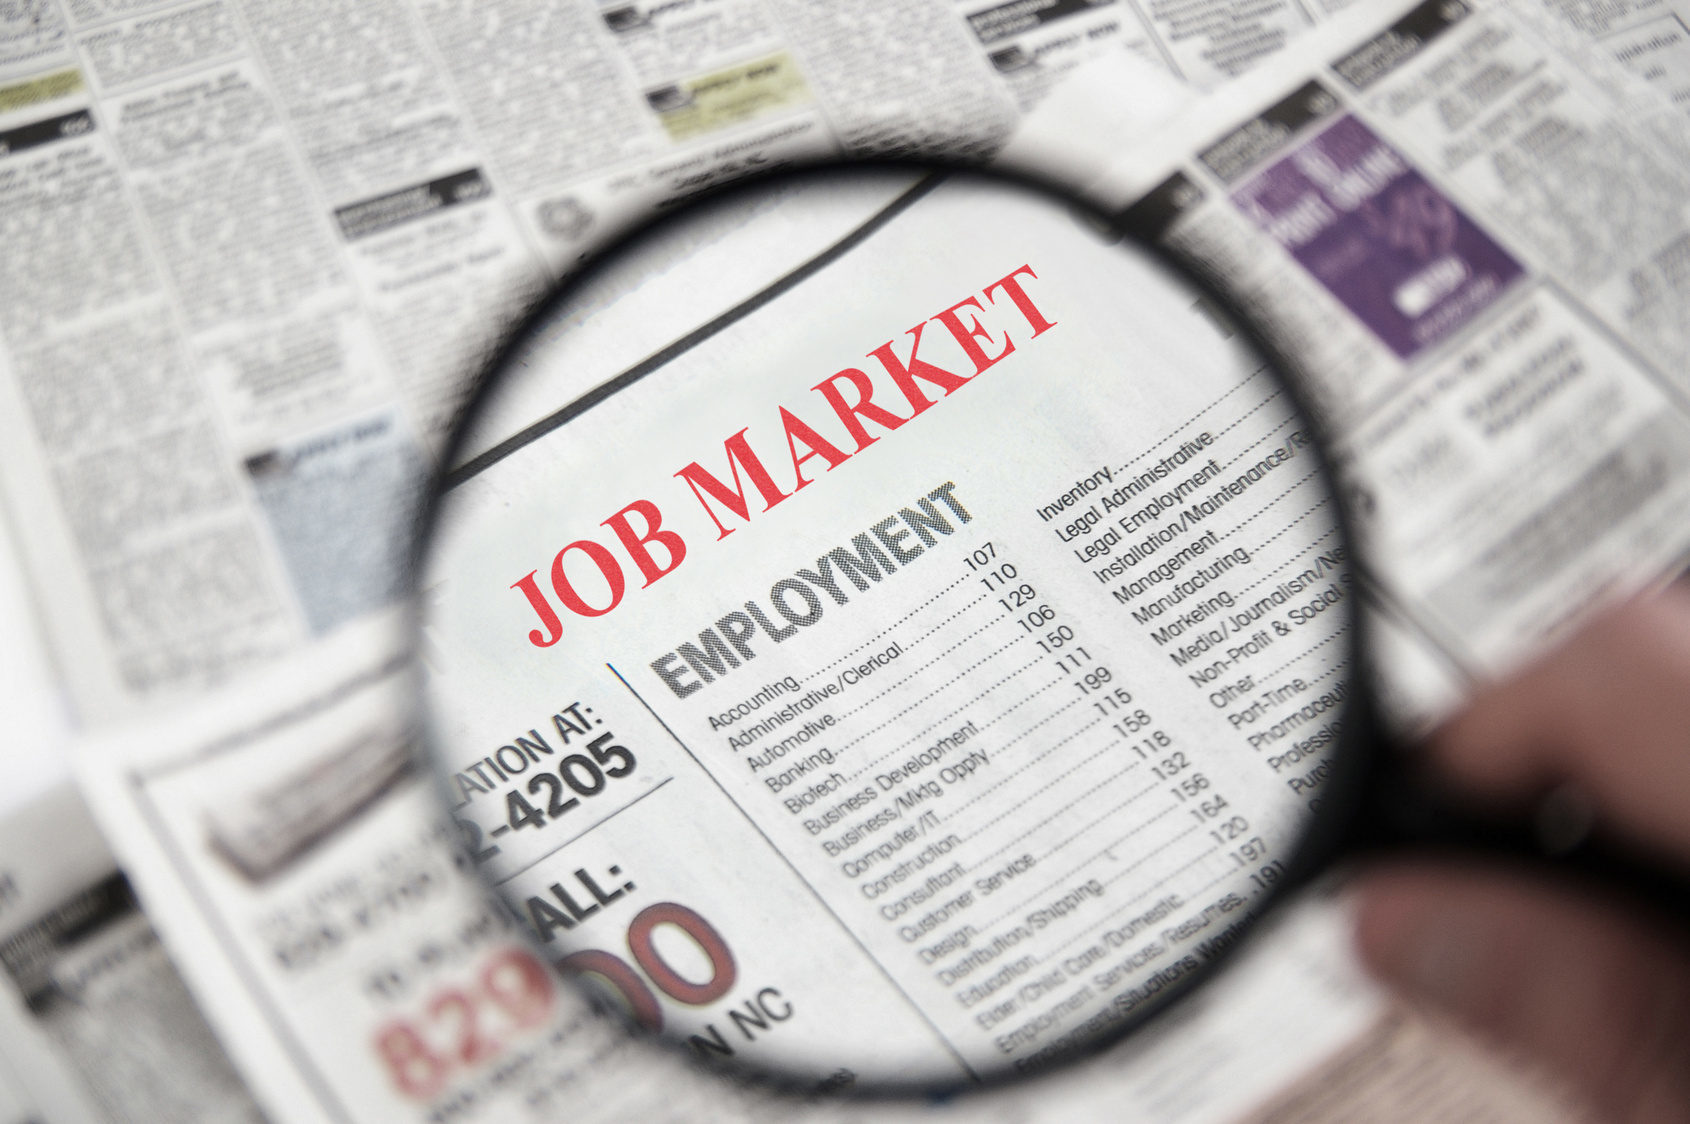 Job market remains strong despite recession worries